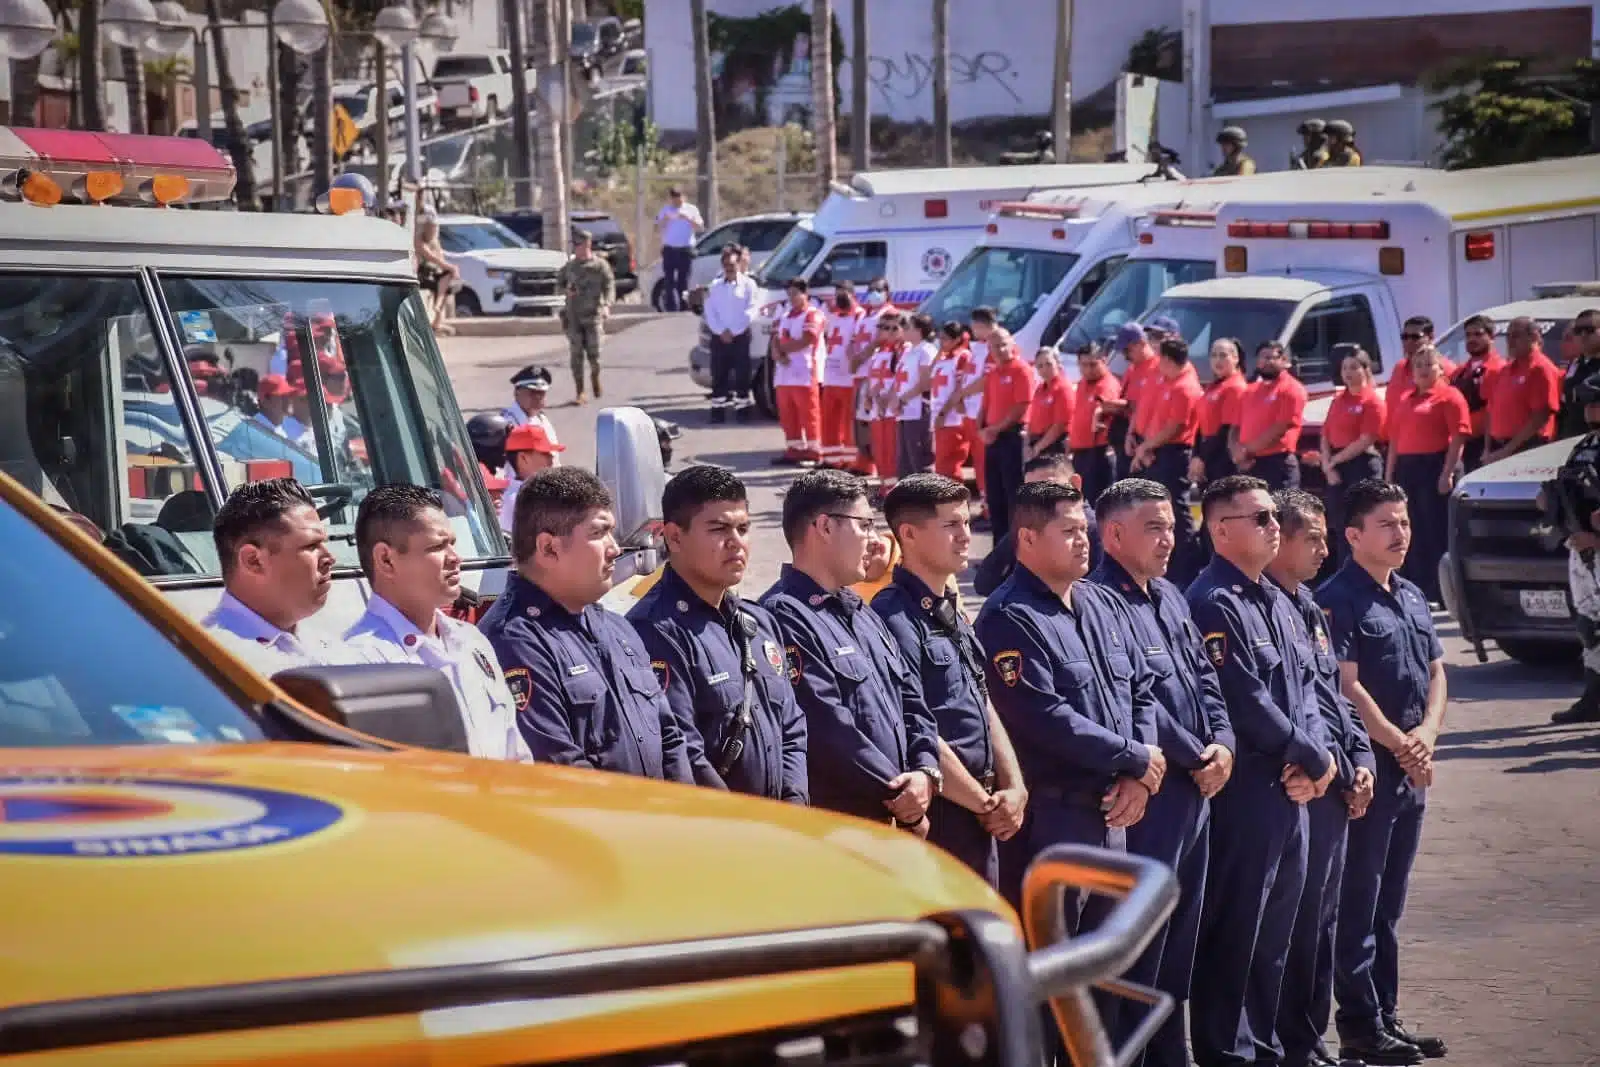 Arranca en Mazatlán el Operativo Semana Santa 2023 (1)